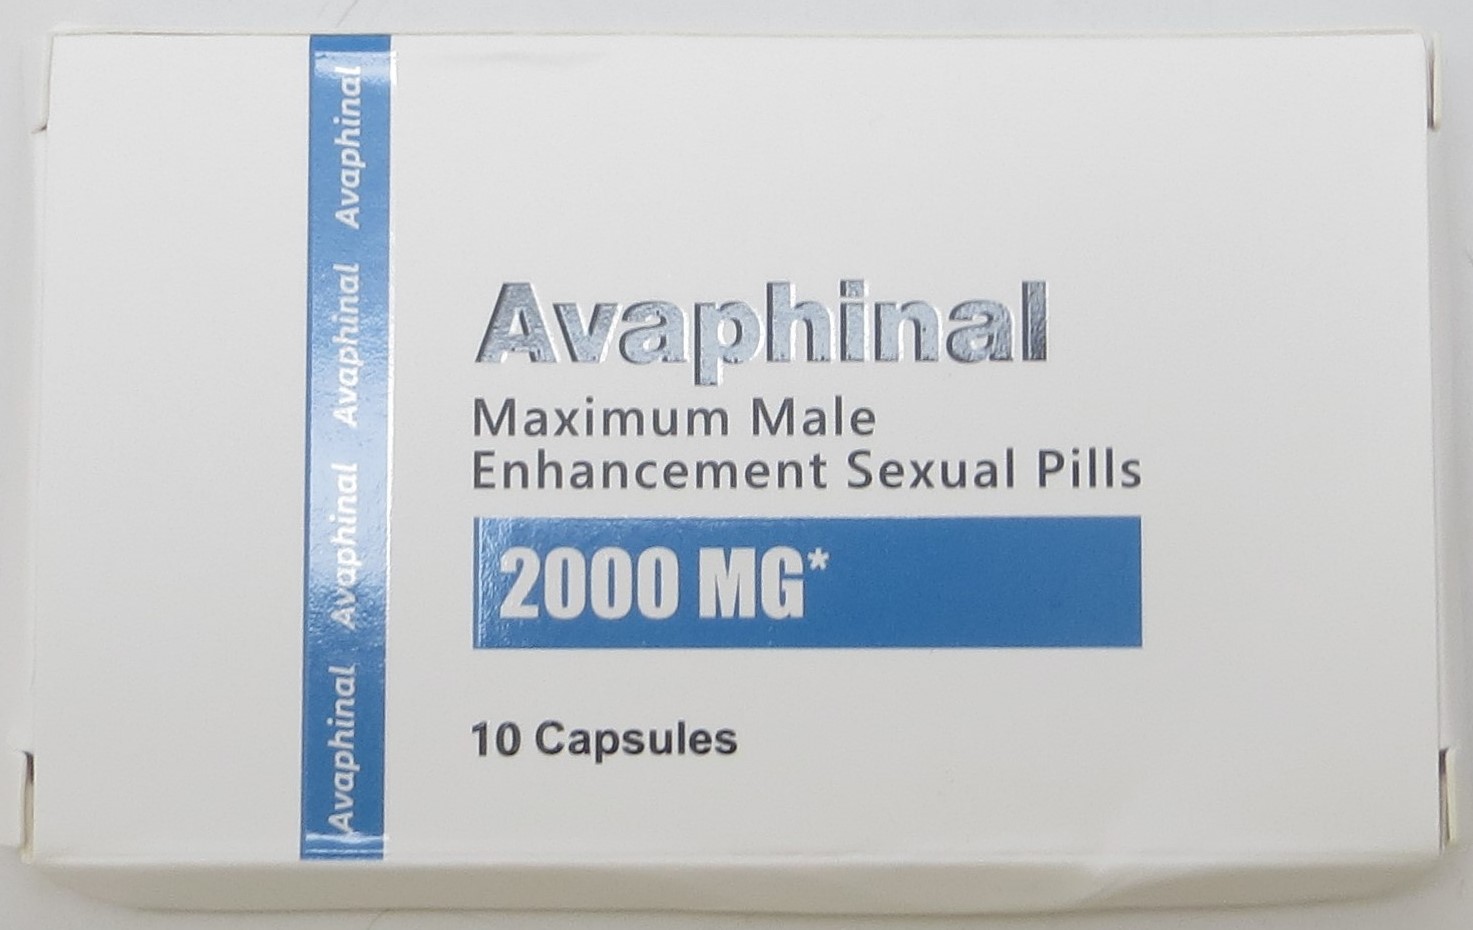 Image of the illigal product: Avaphinal Maximum Male Enhancement